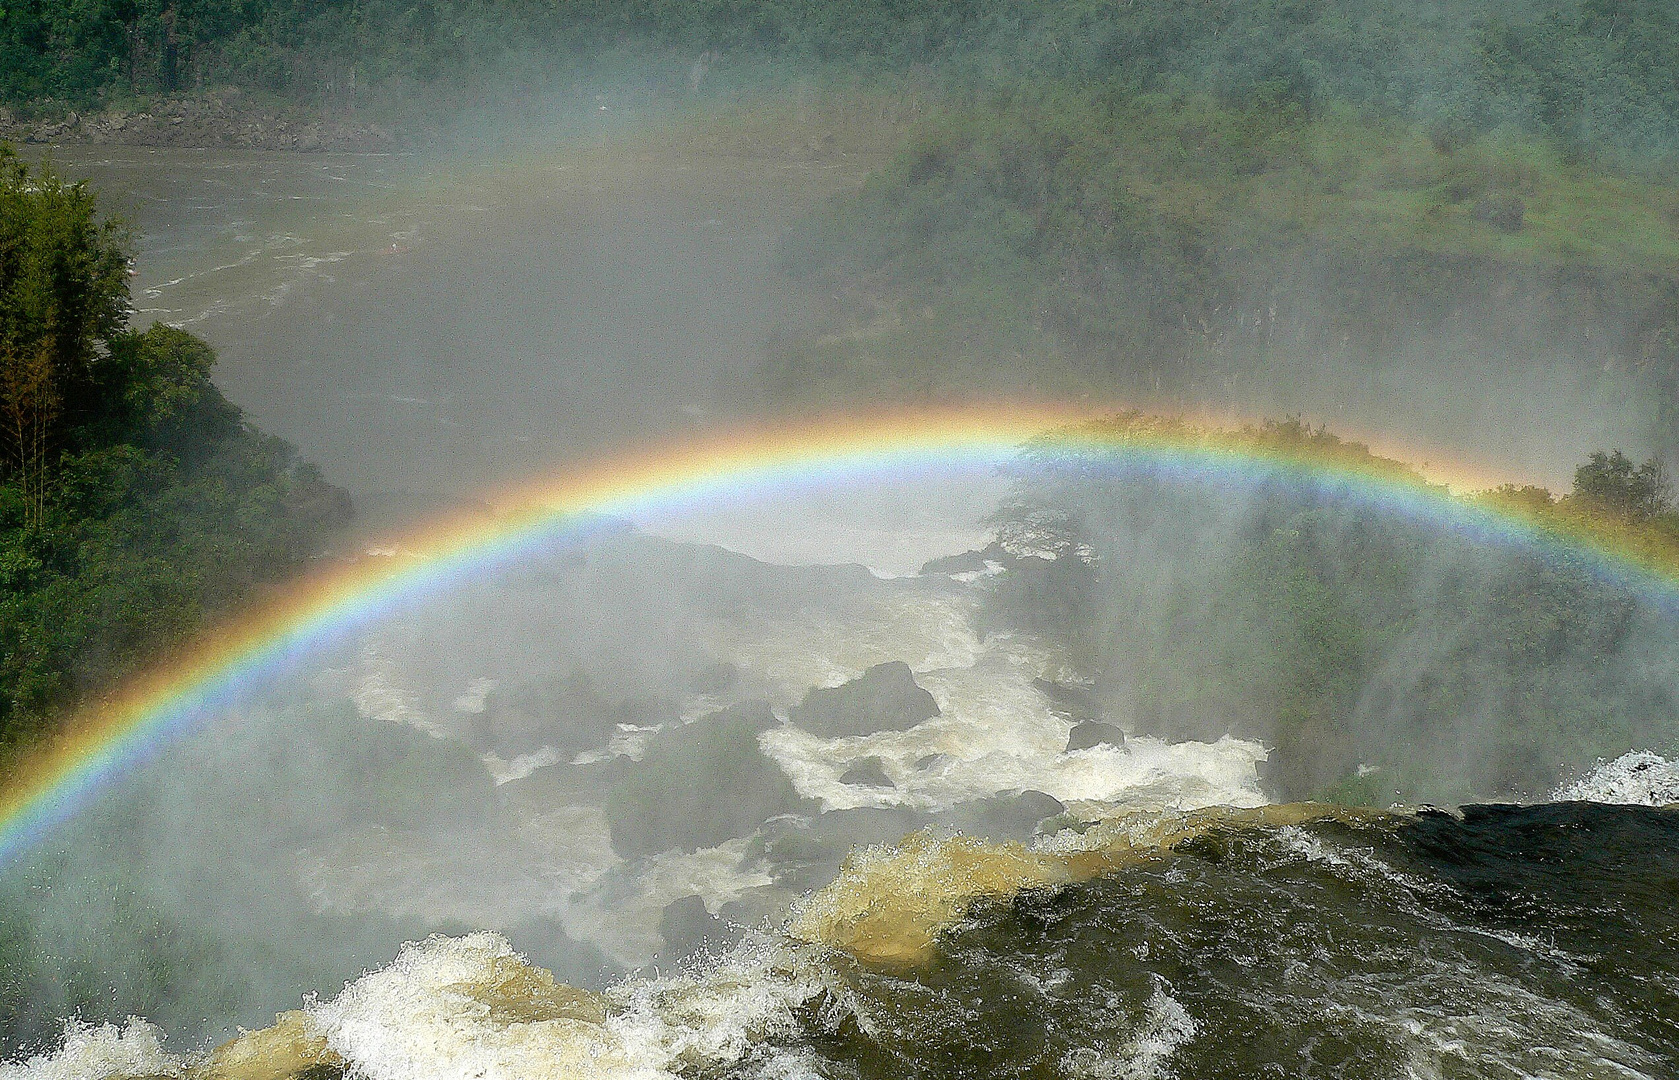 Regenbogen am grossen Wasser Iguazú